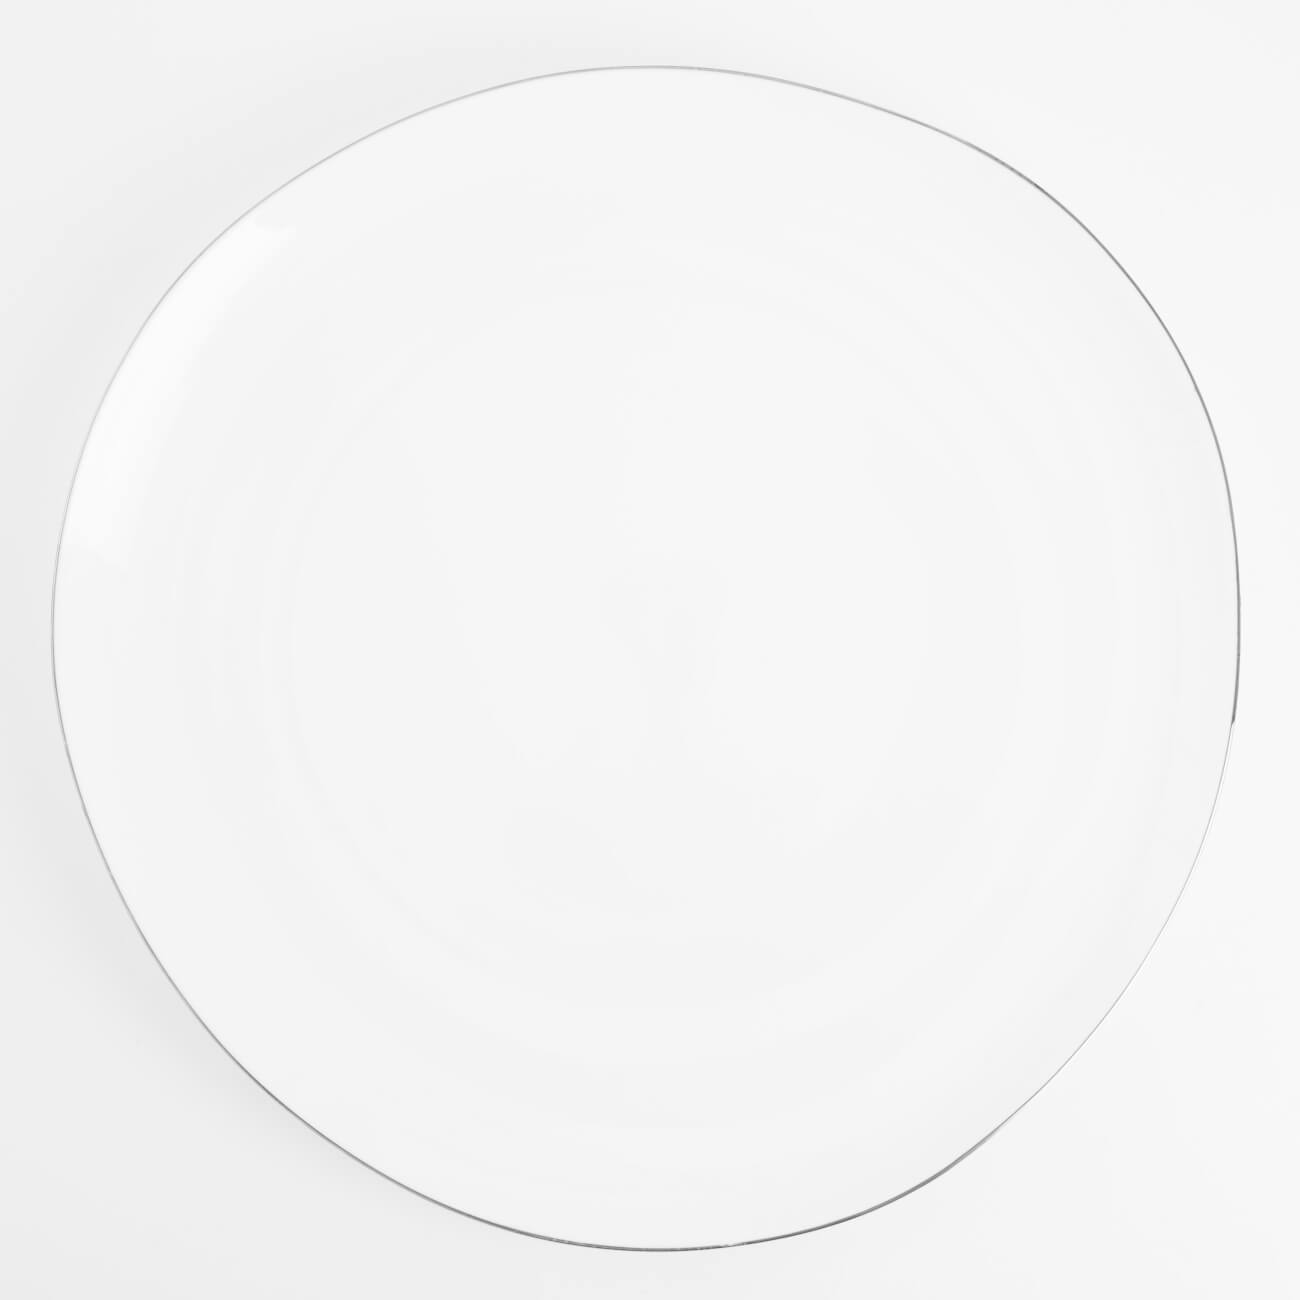 Тарелка обеденная, 29 см, фарфор F, белая, Bend silver тарелка обеденная wedgwood wgw 40003894 гибискус 27 см